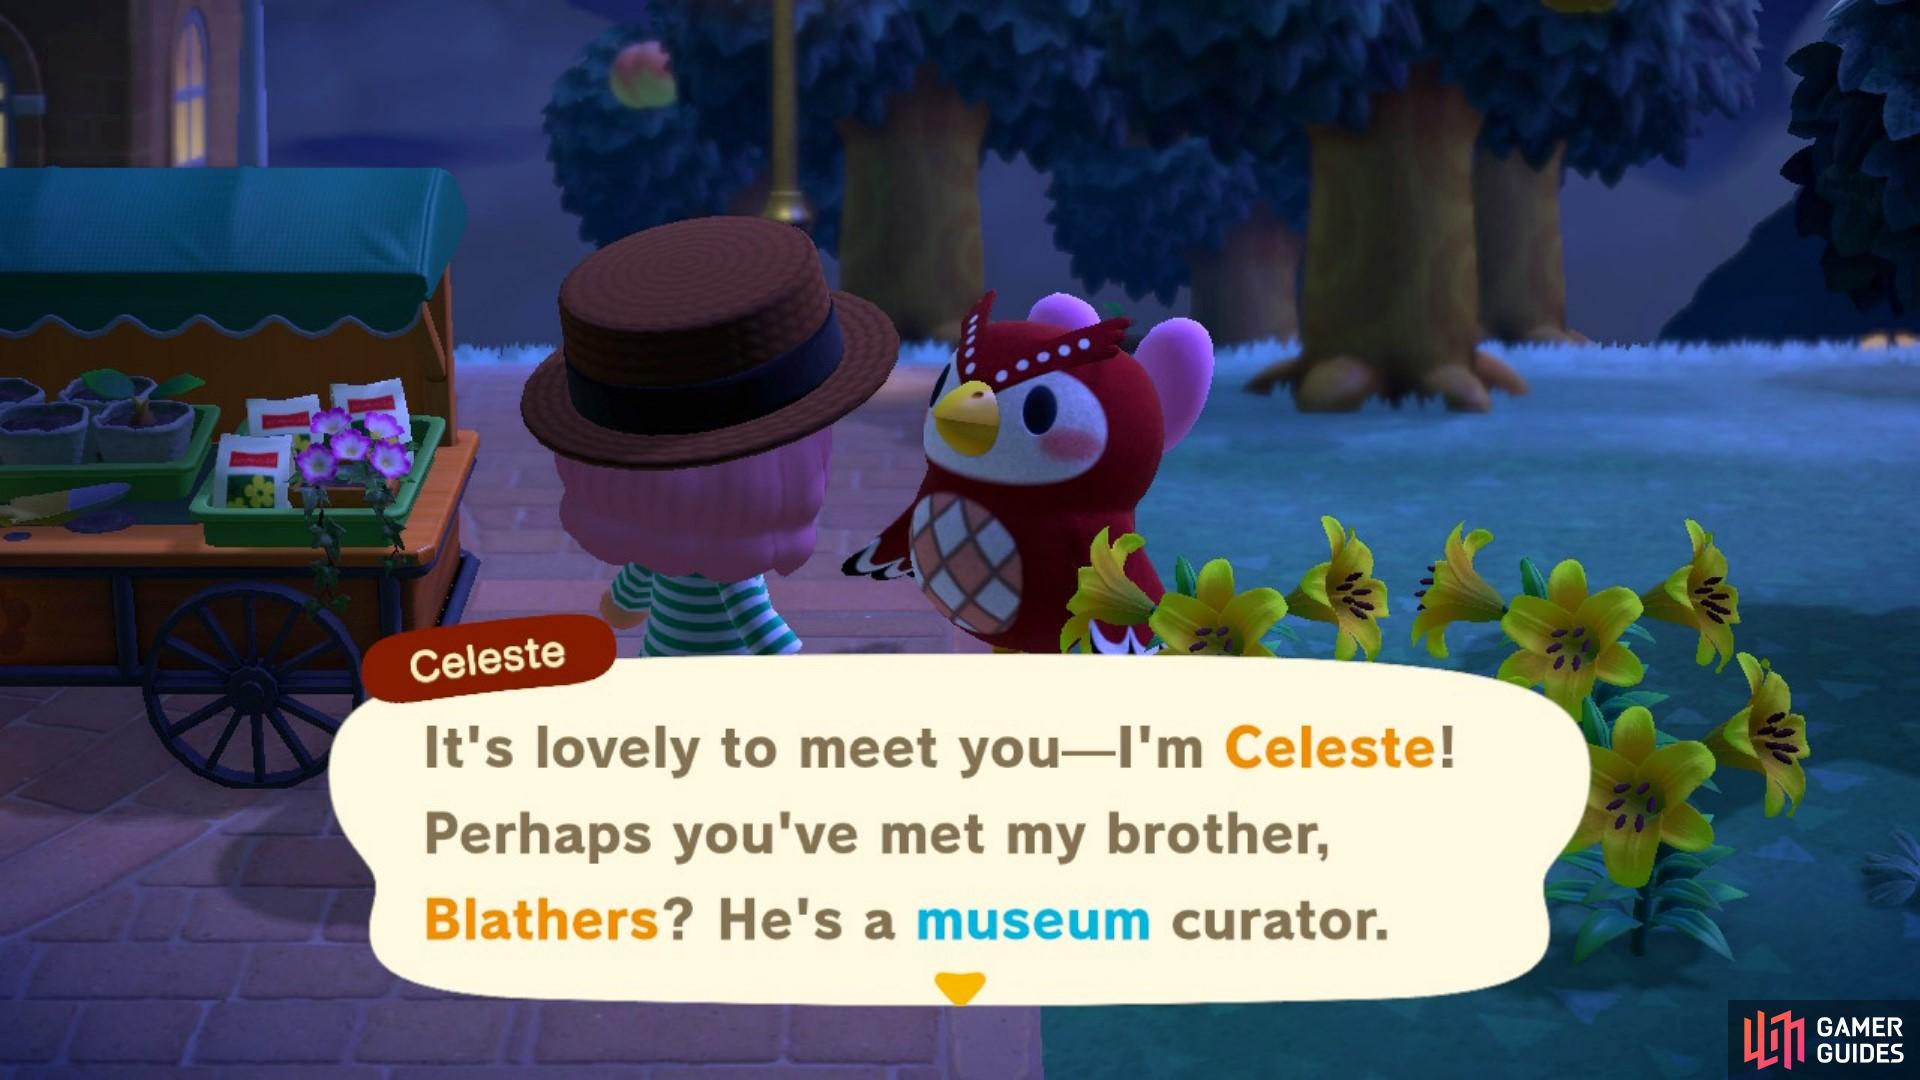 Celeste is Blathers’ sister! 